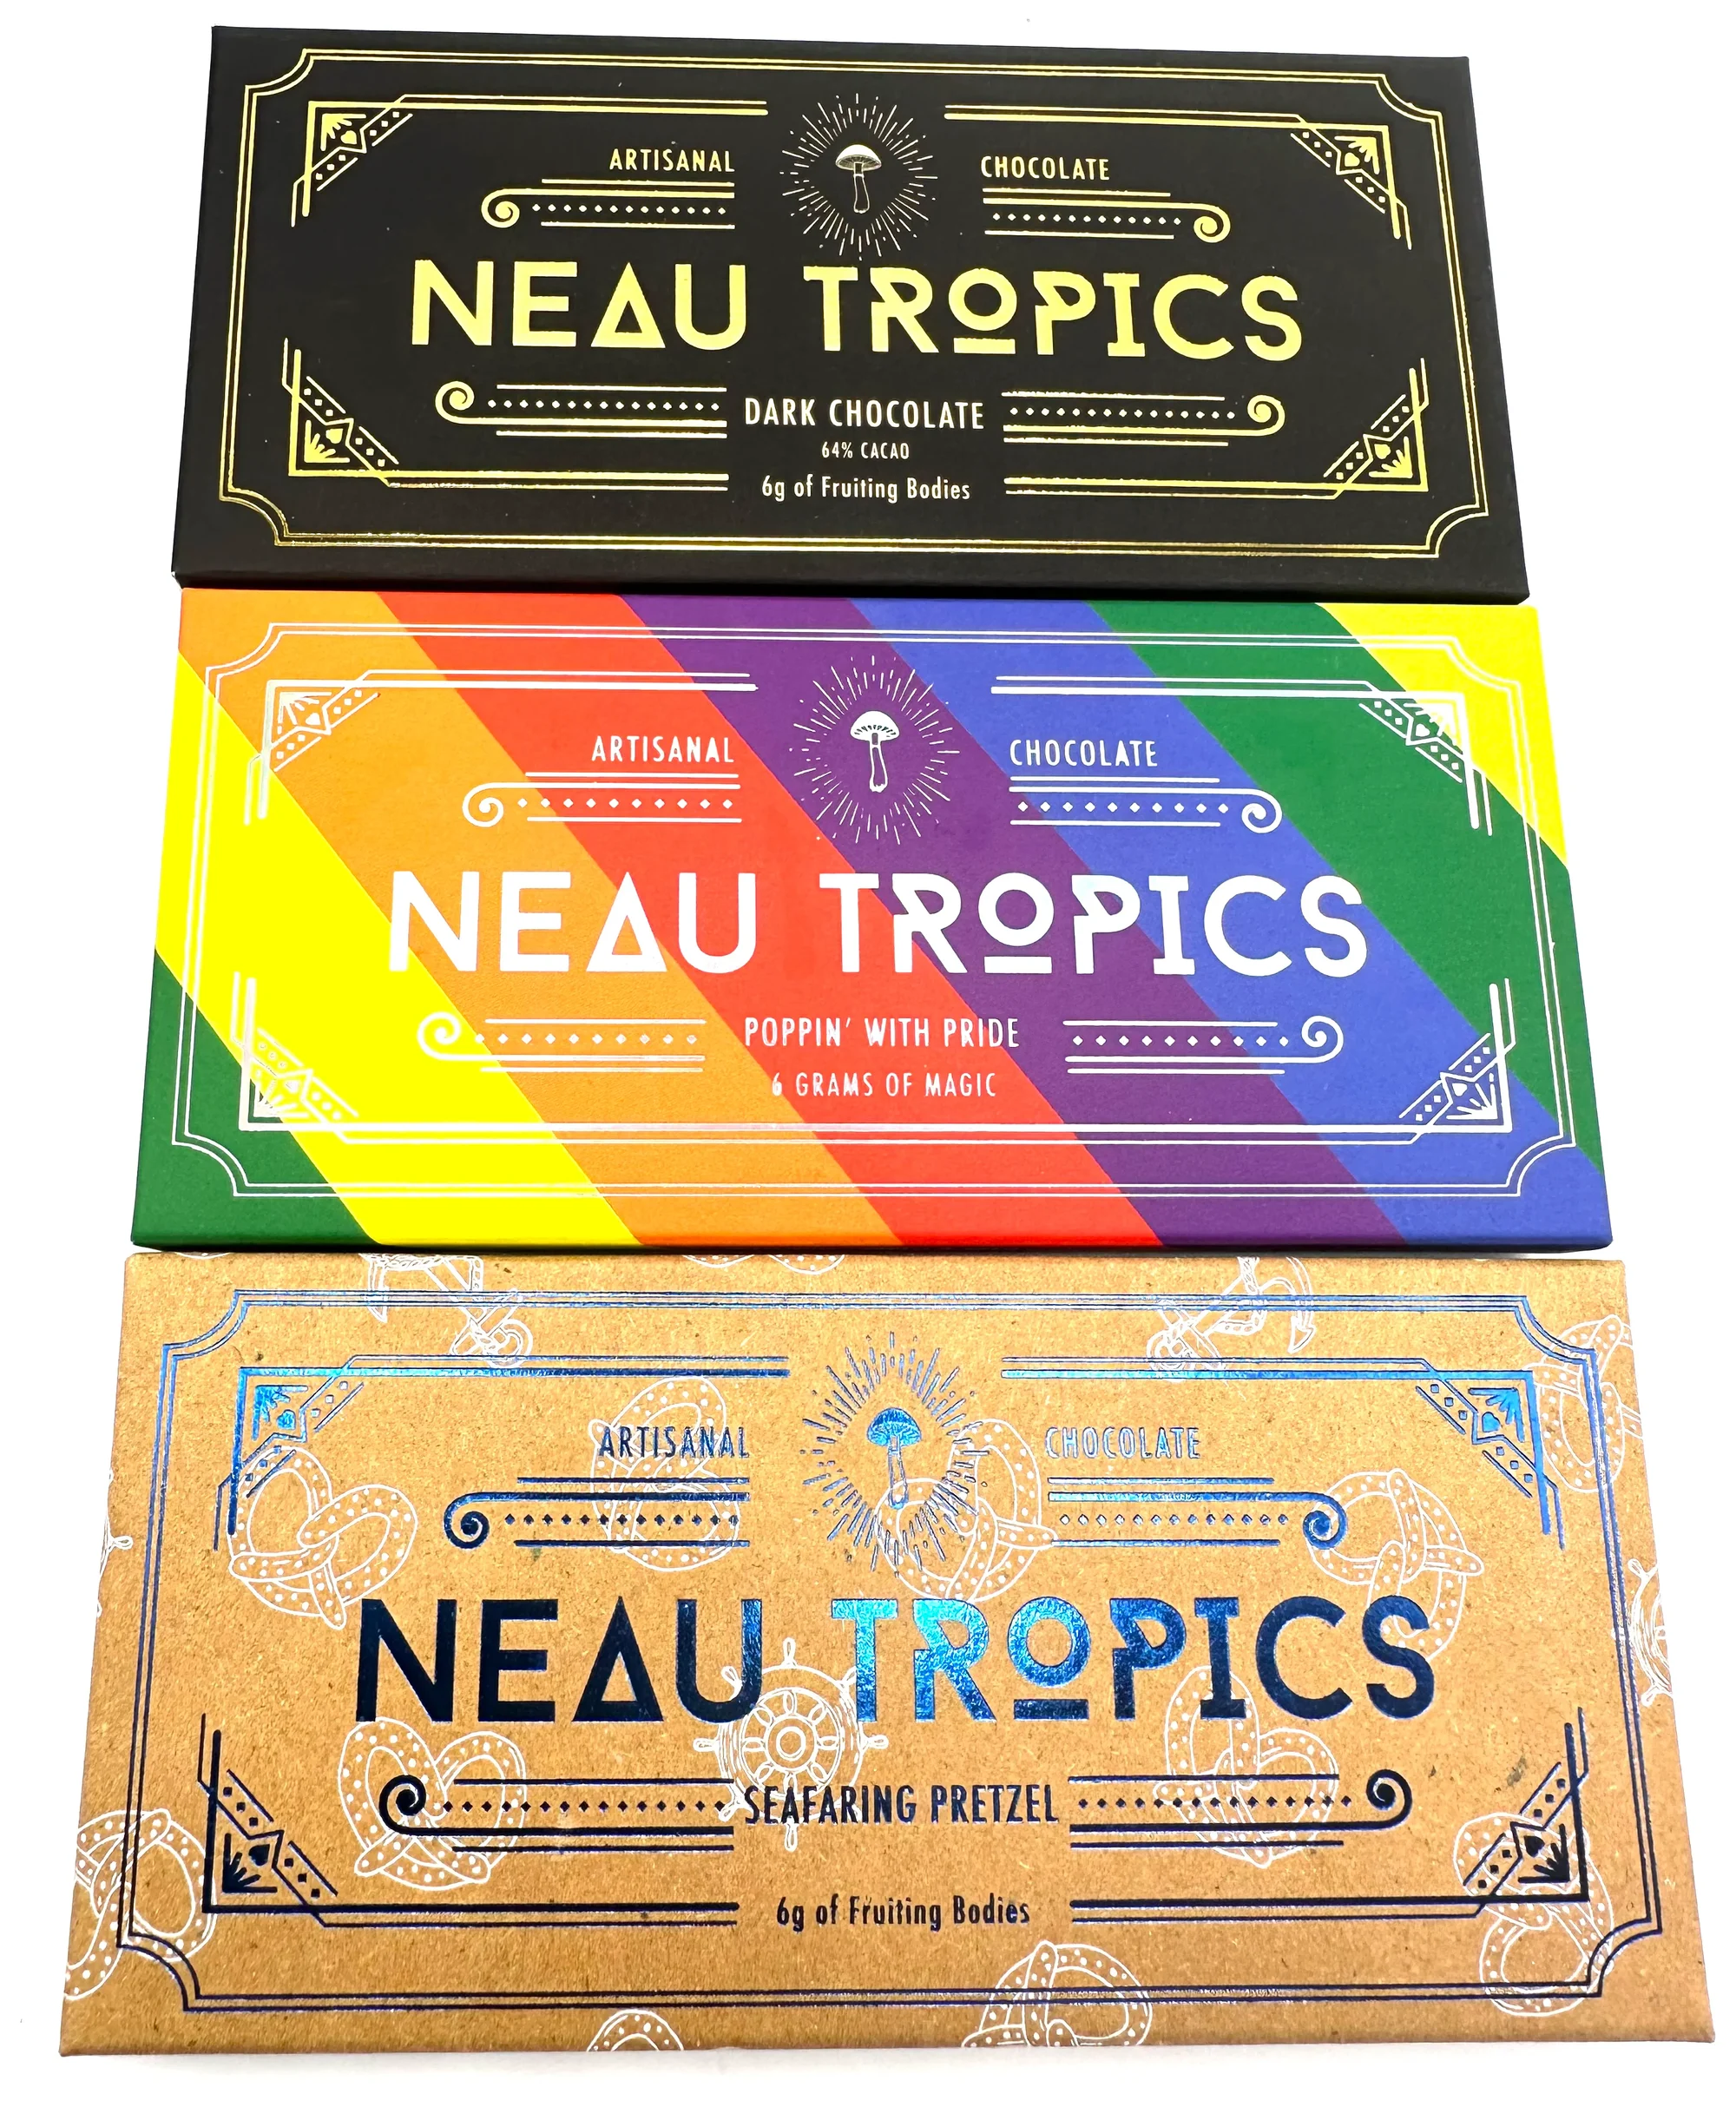 NEAU TROPICS BARS (a box of 10 bars)